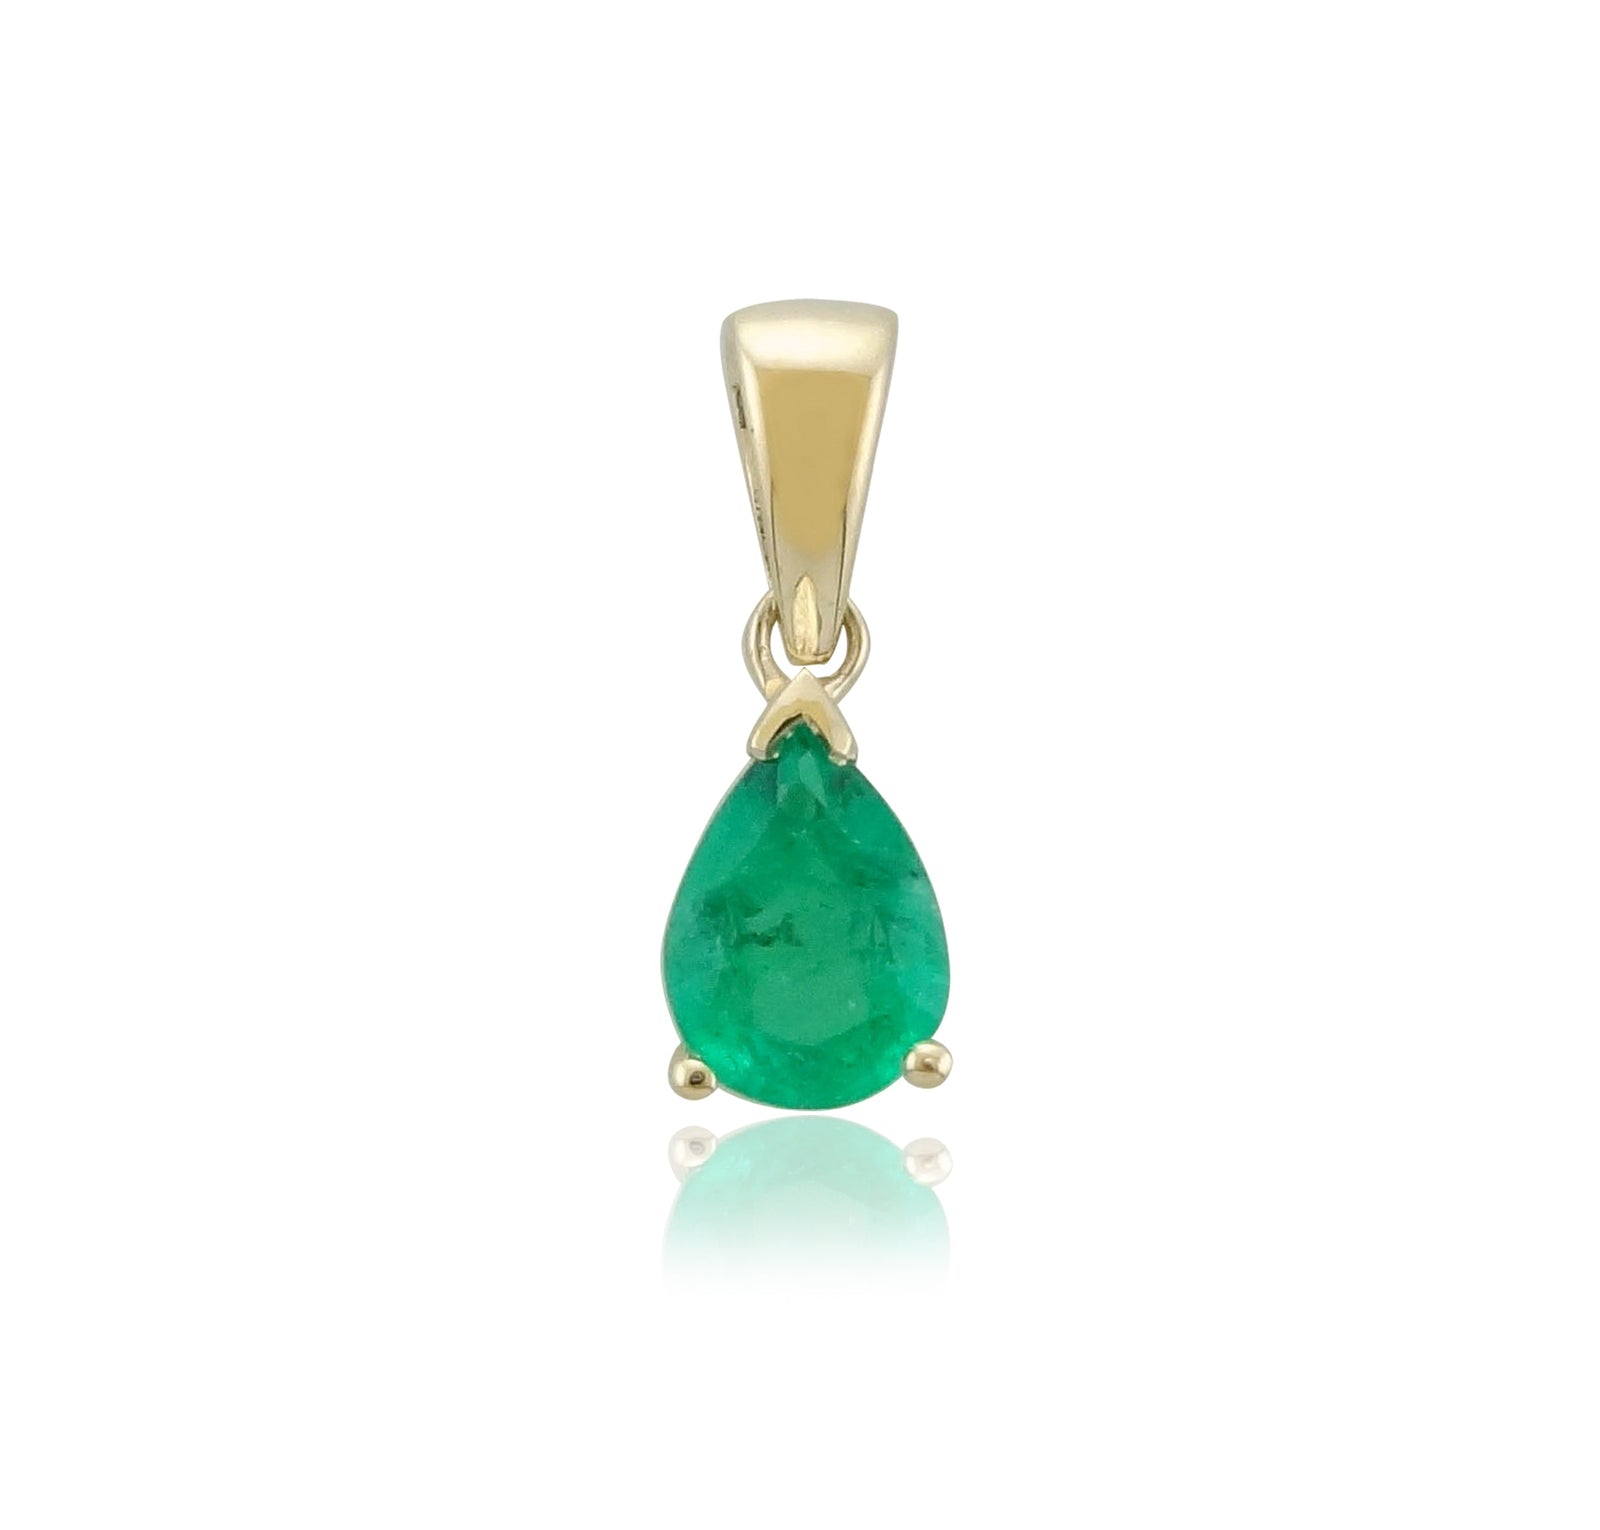 9ct gold 7x5mm pear shape emerald pendant